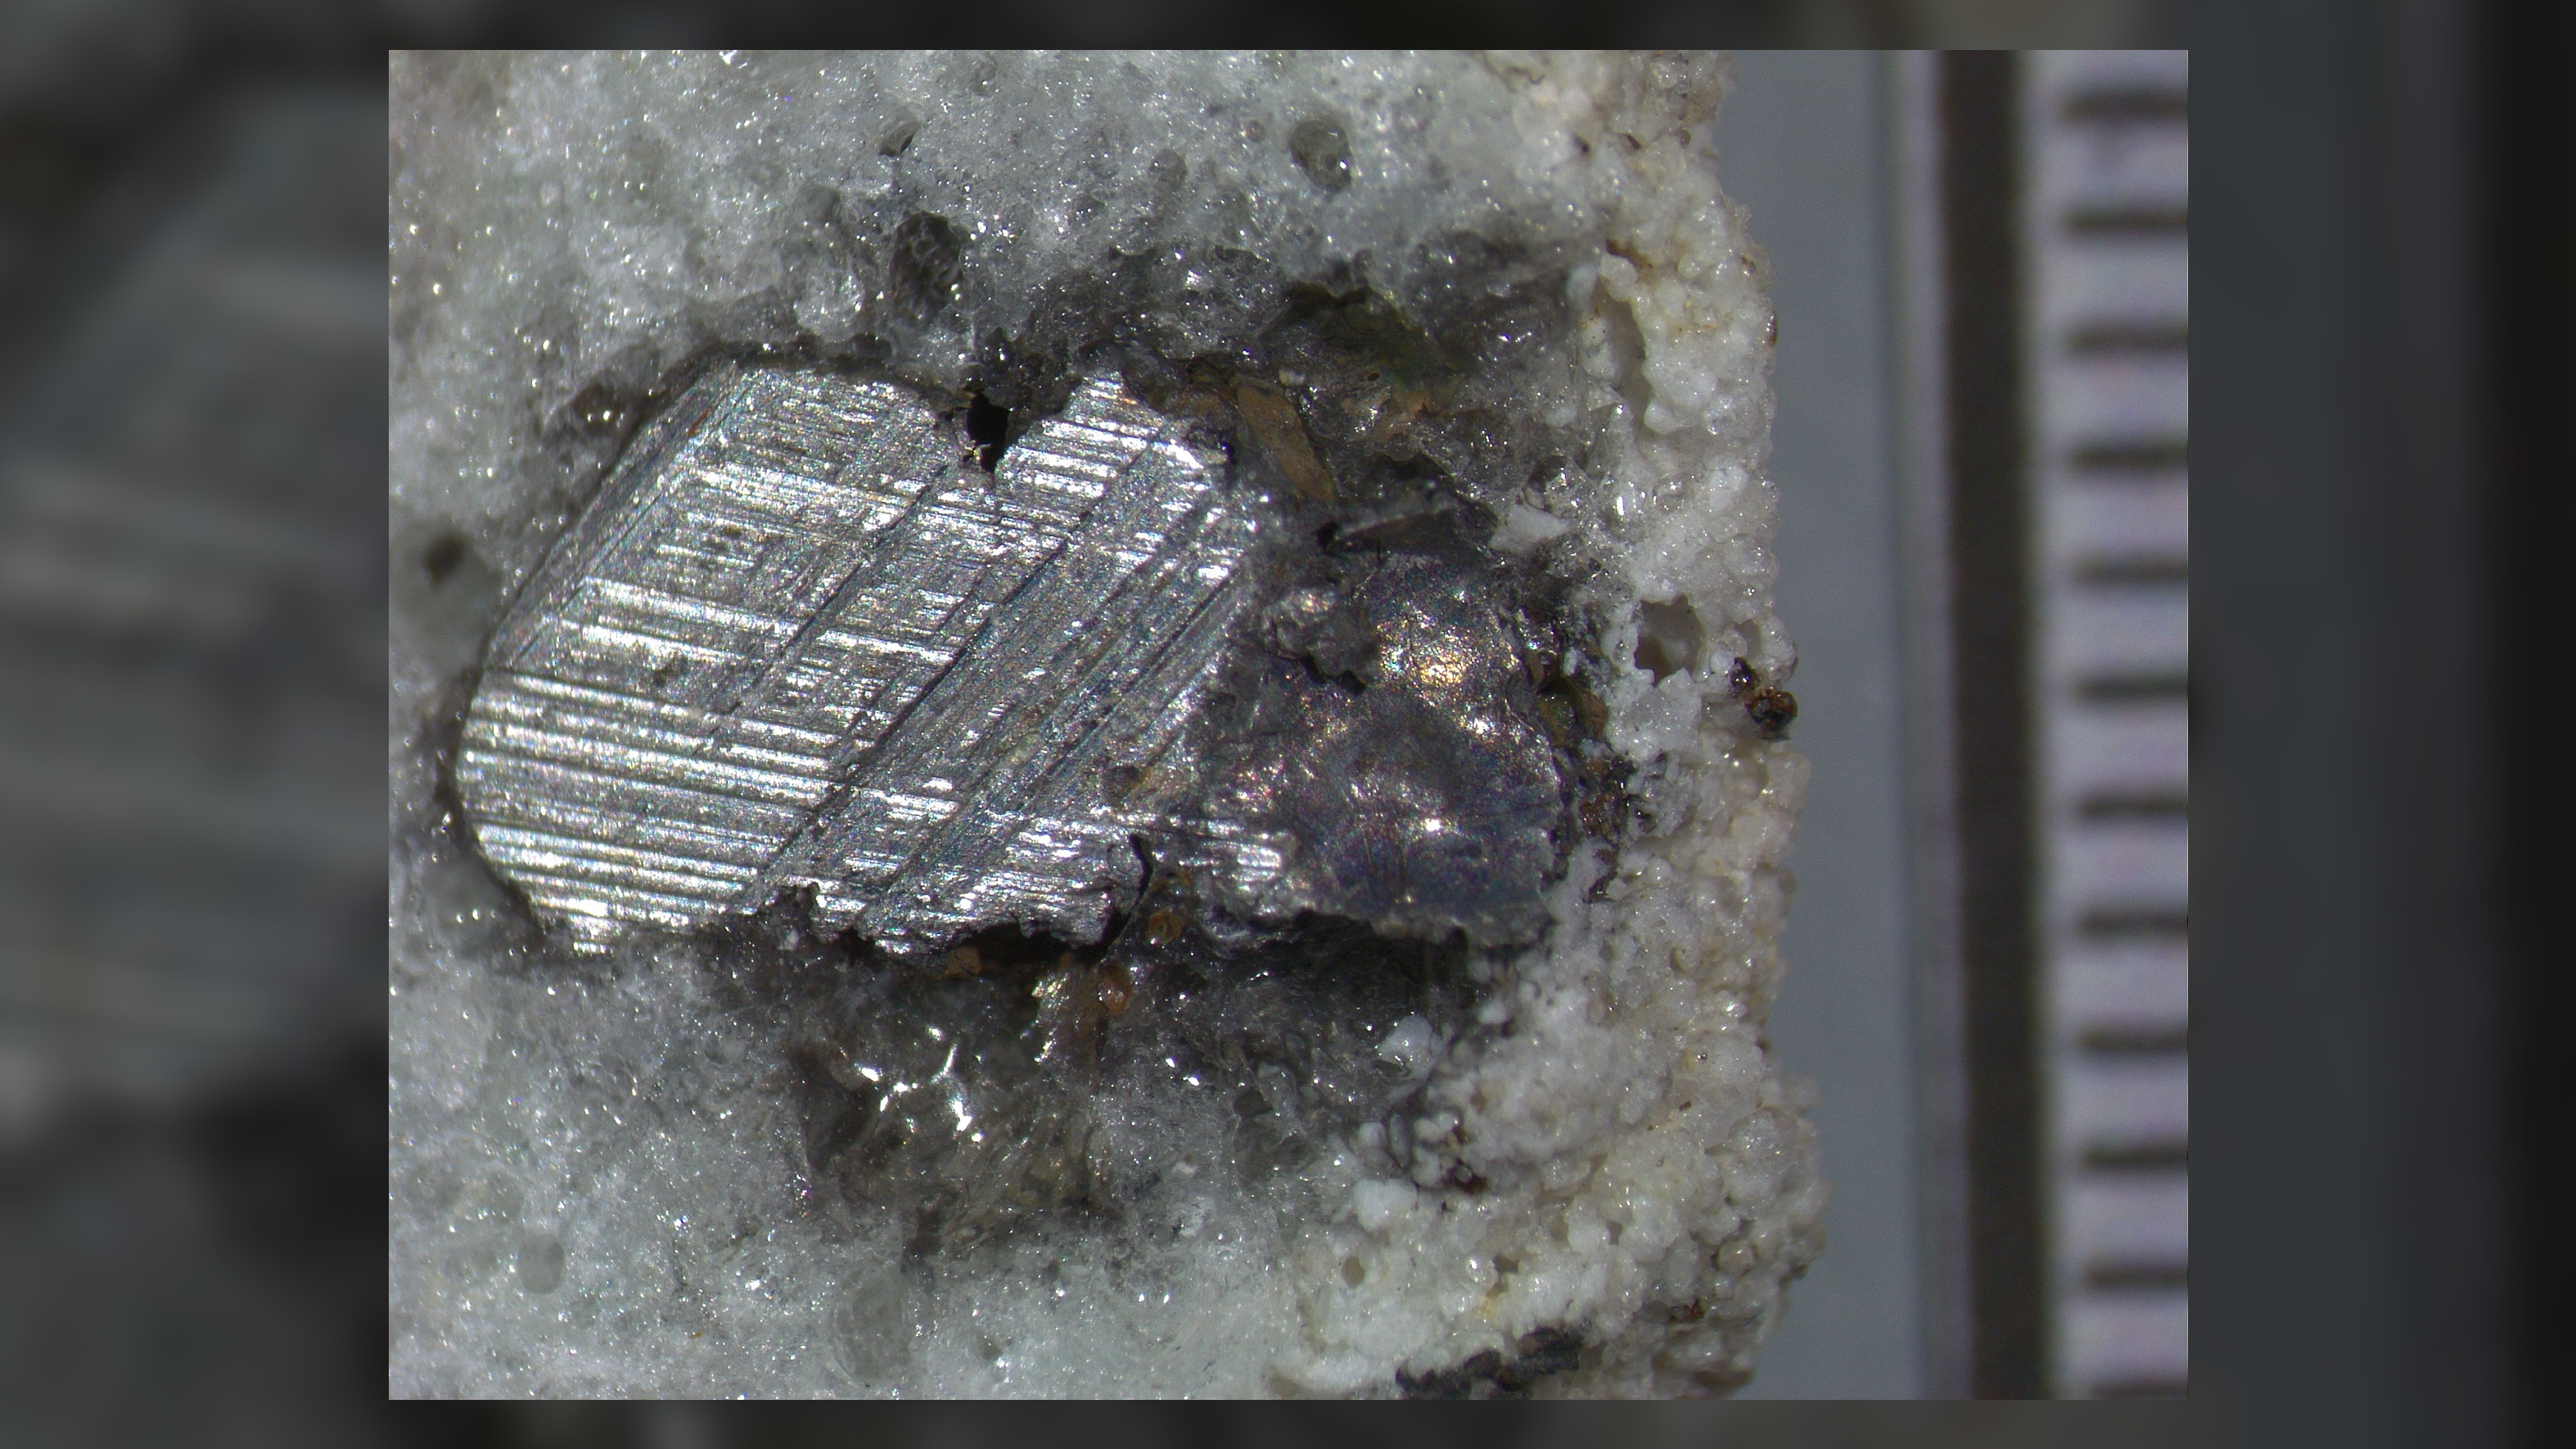 A close-up on a rare quasicrystal embedded in a fulgurite found in Nebraska.